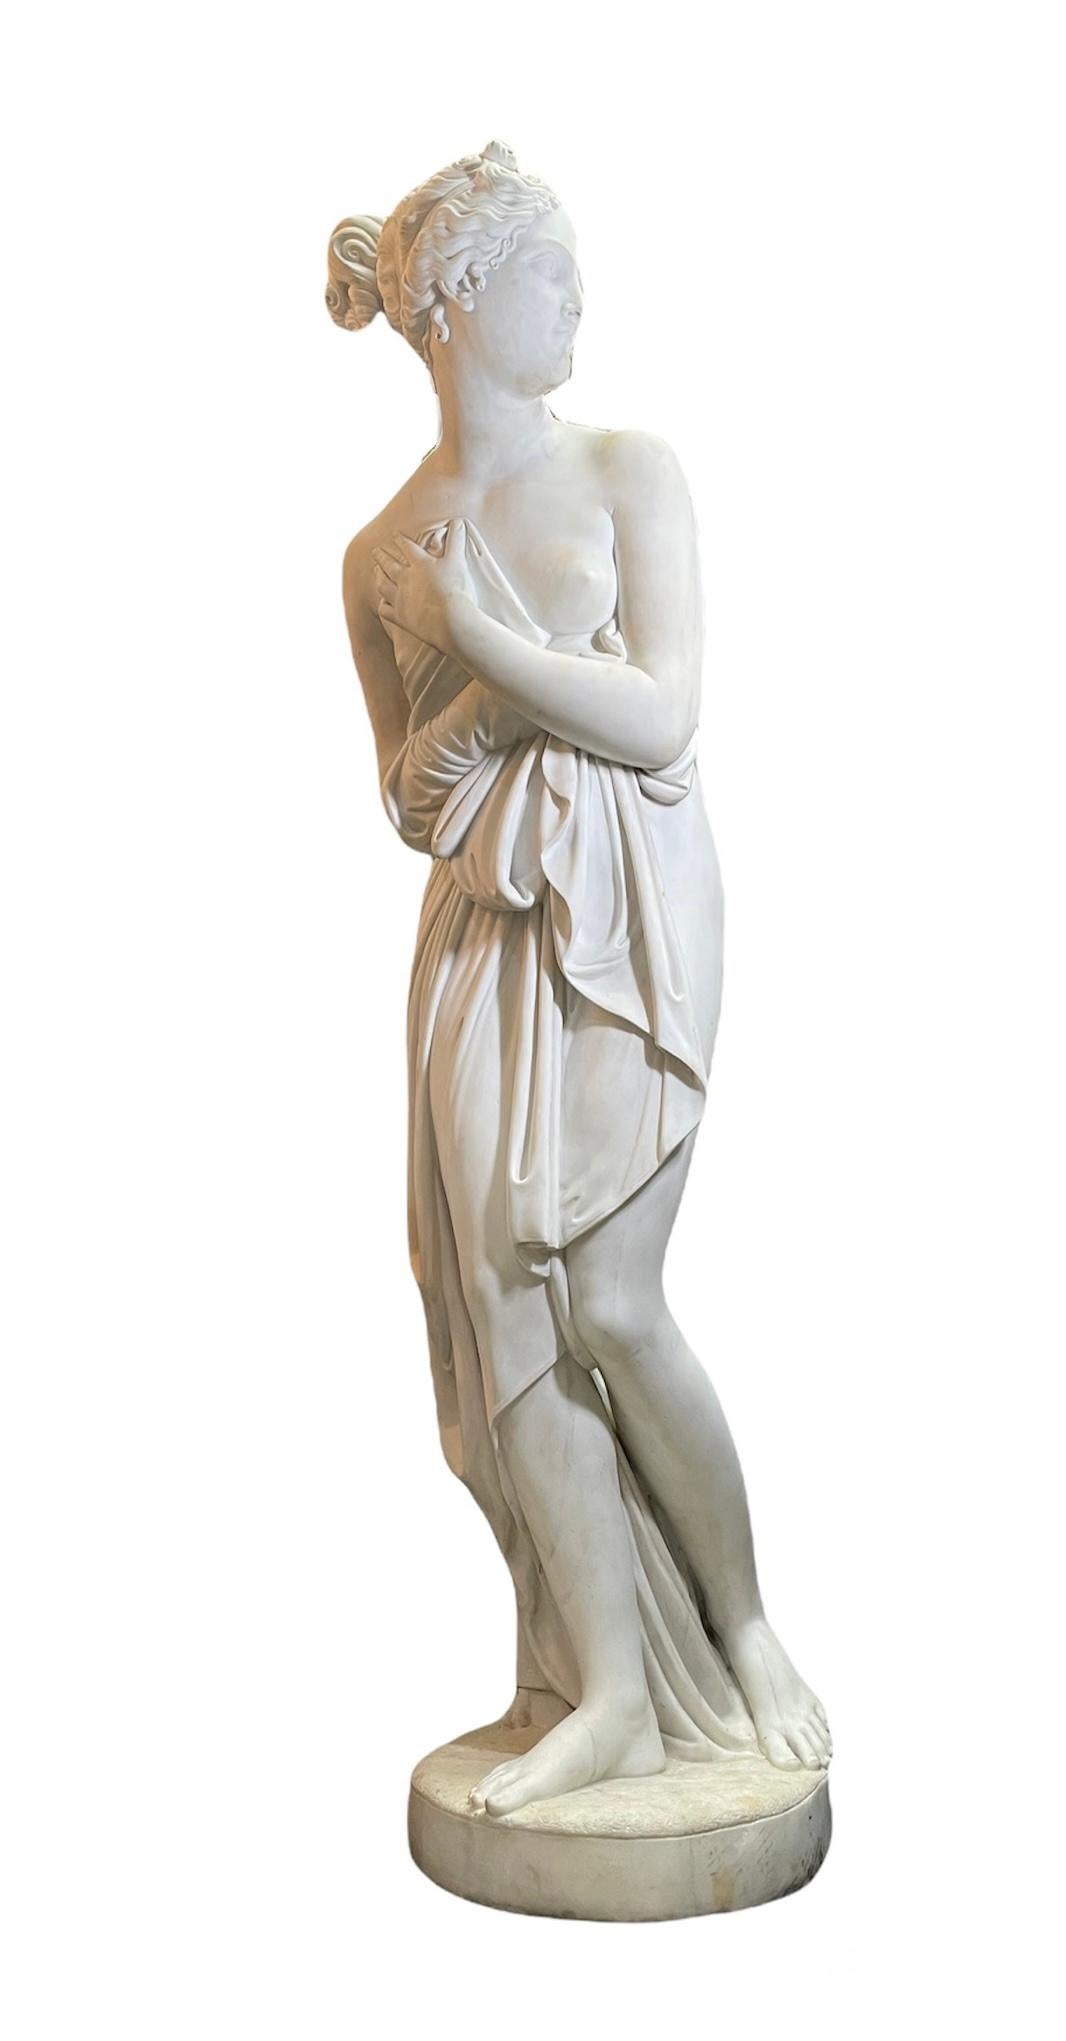 Neoclassical Life Size Marble Sculpture of Venus After “La Venus Italica” For Sale